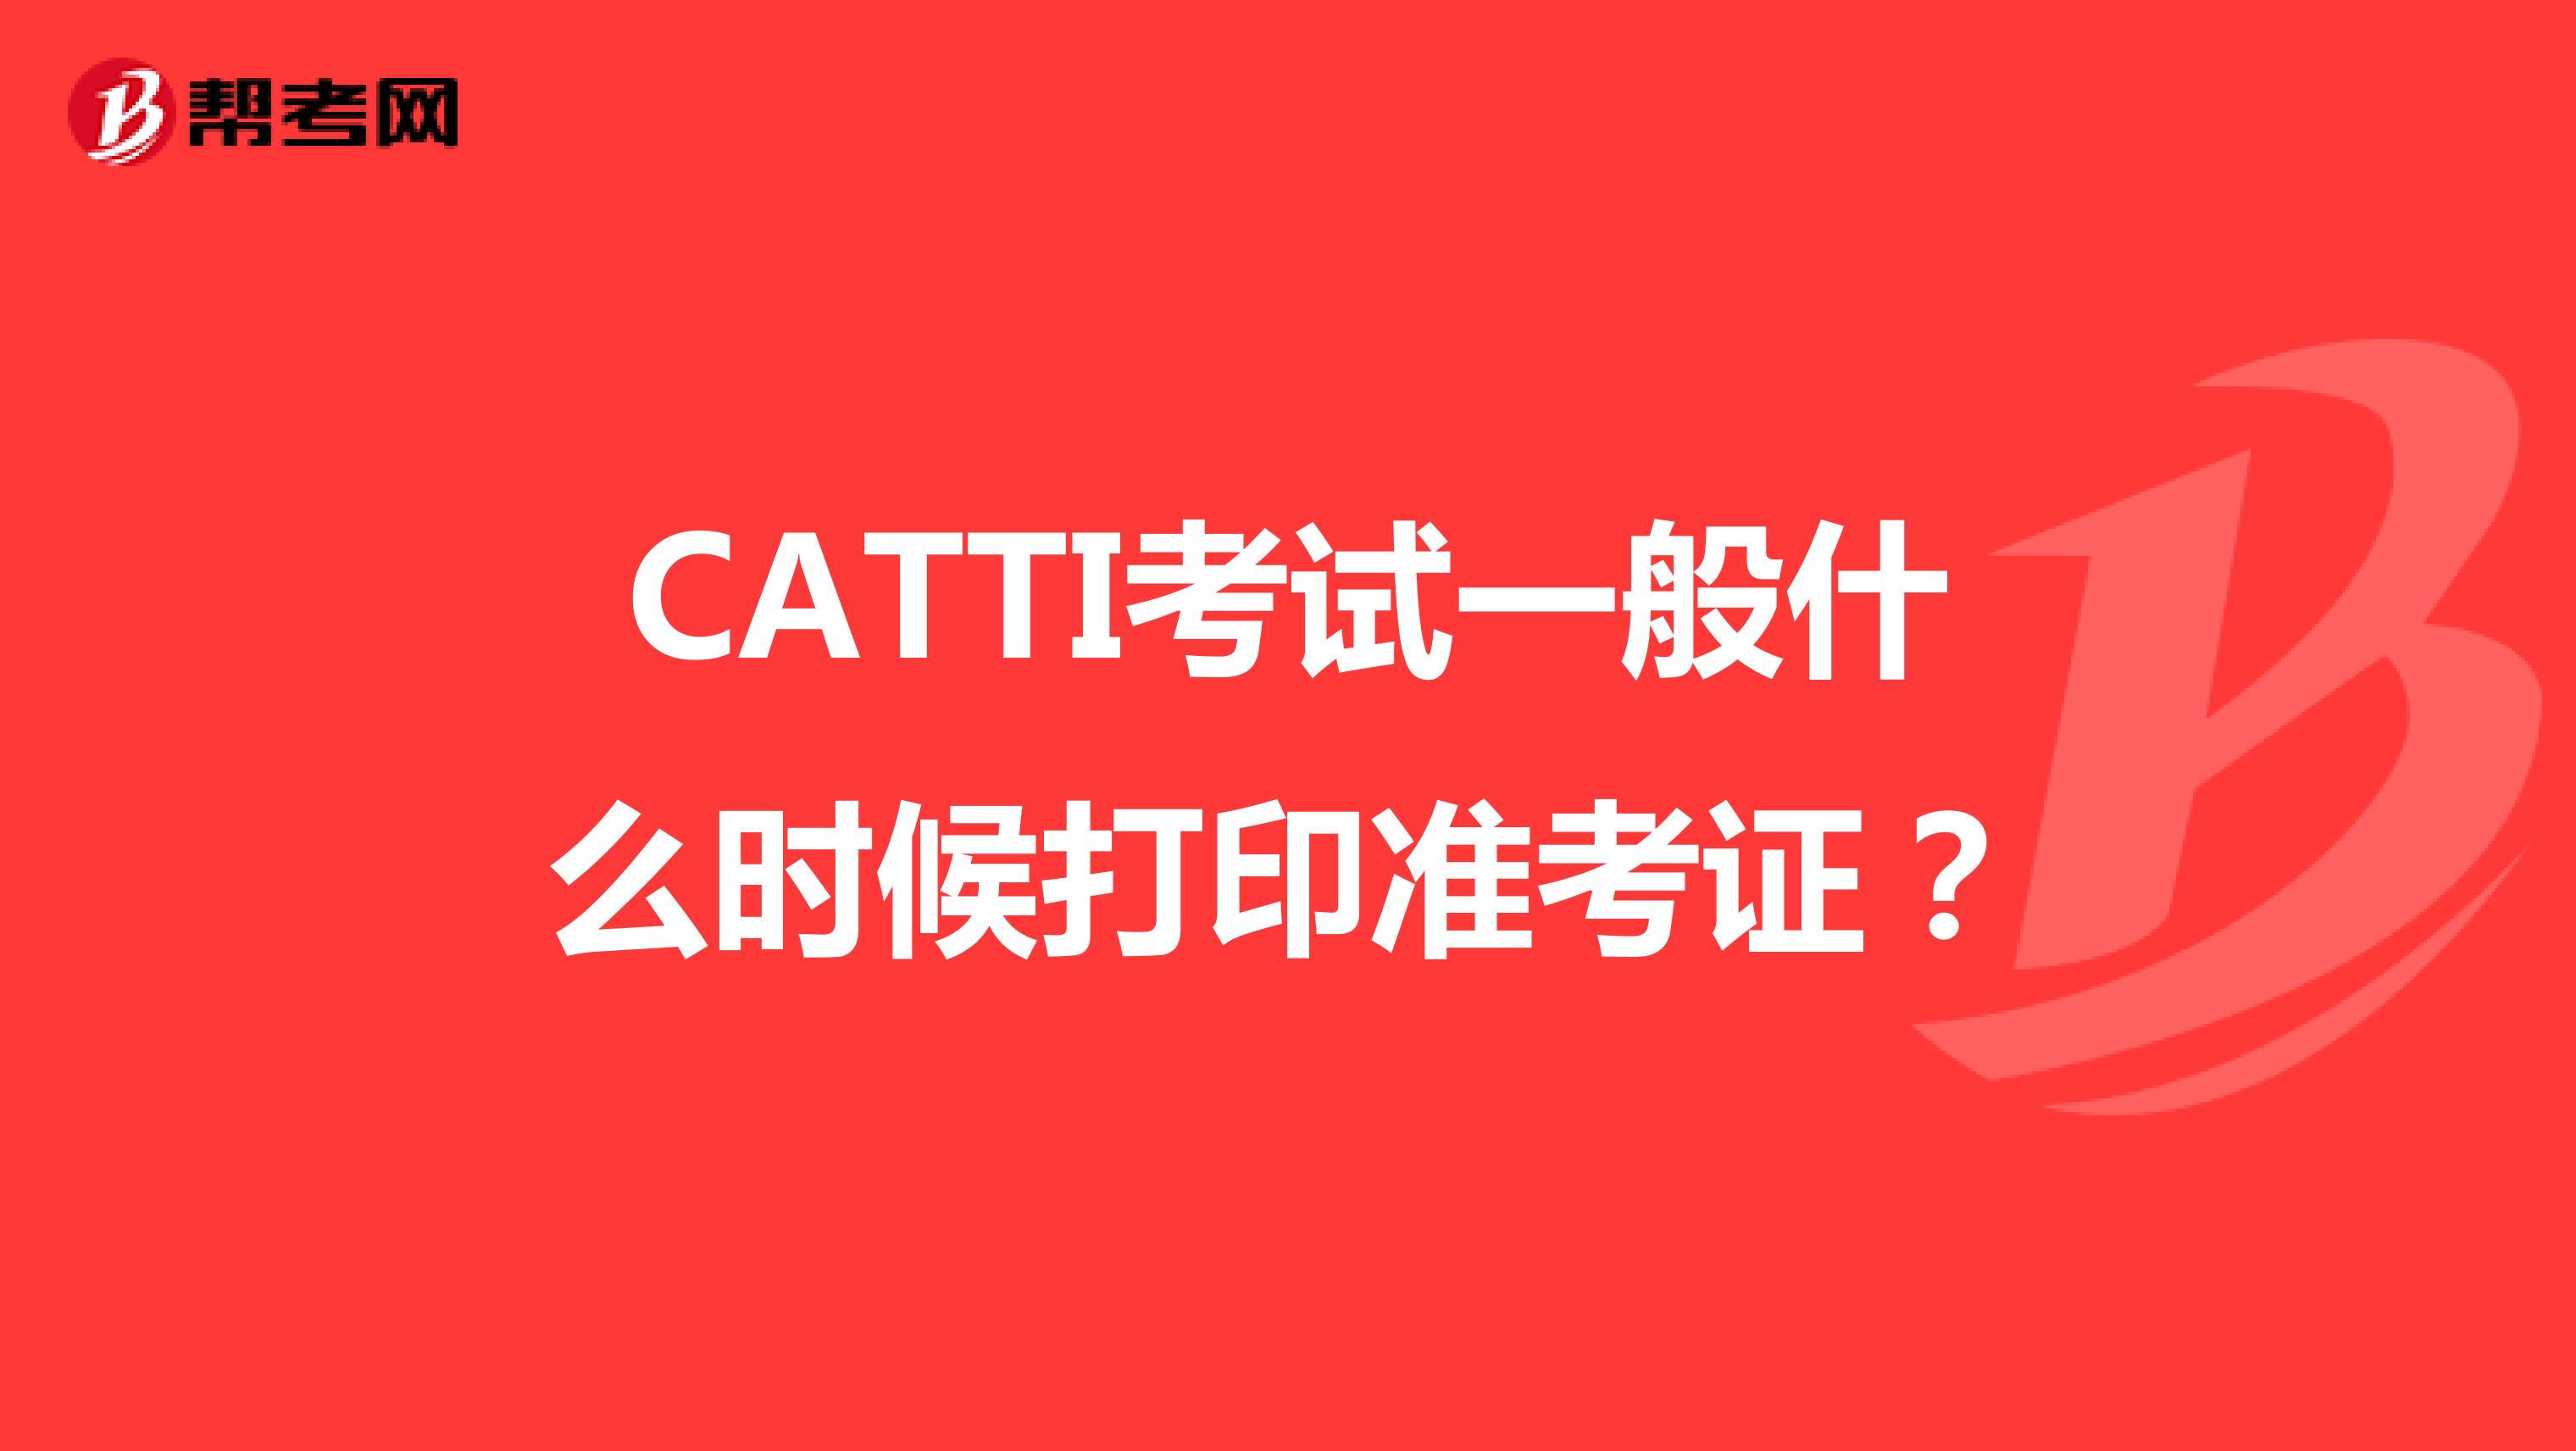 CATTI考试一般什么时候打印准考证？